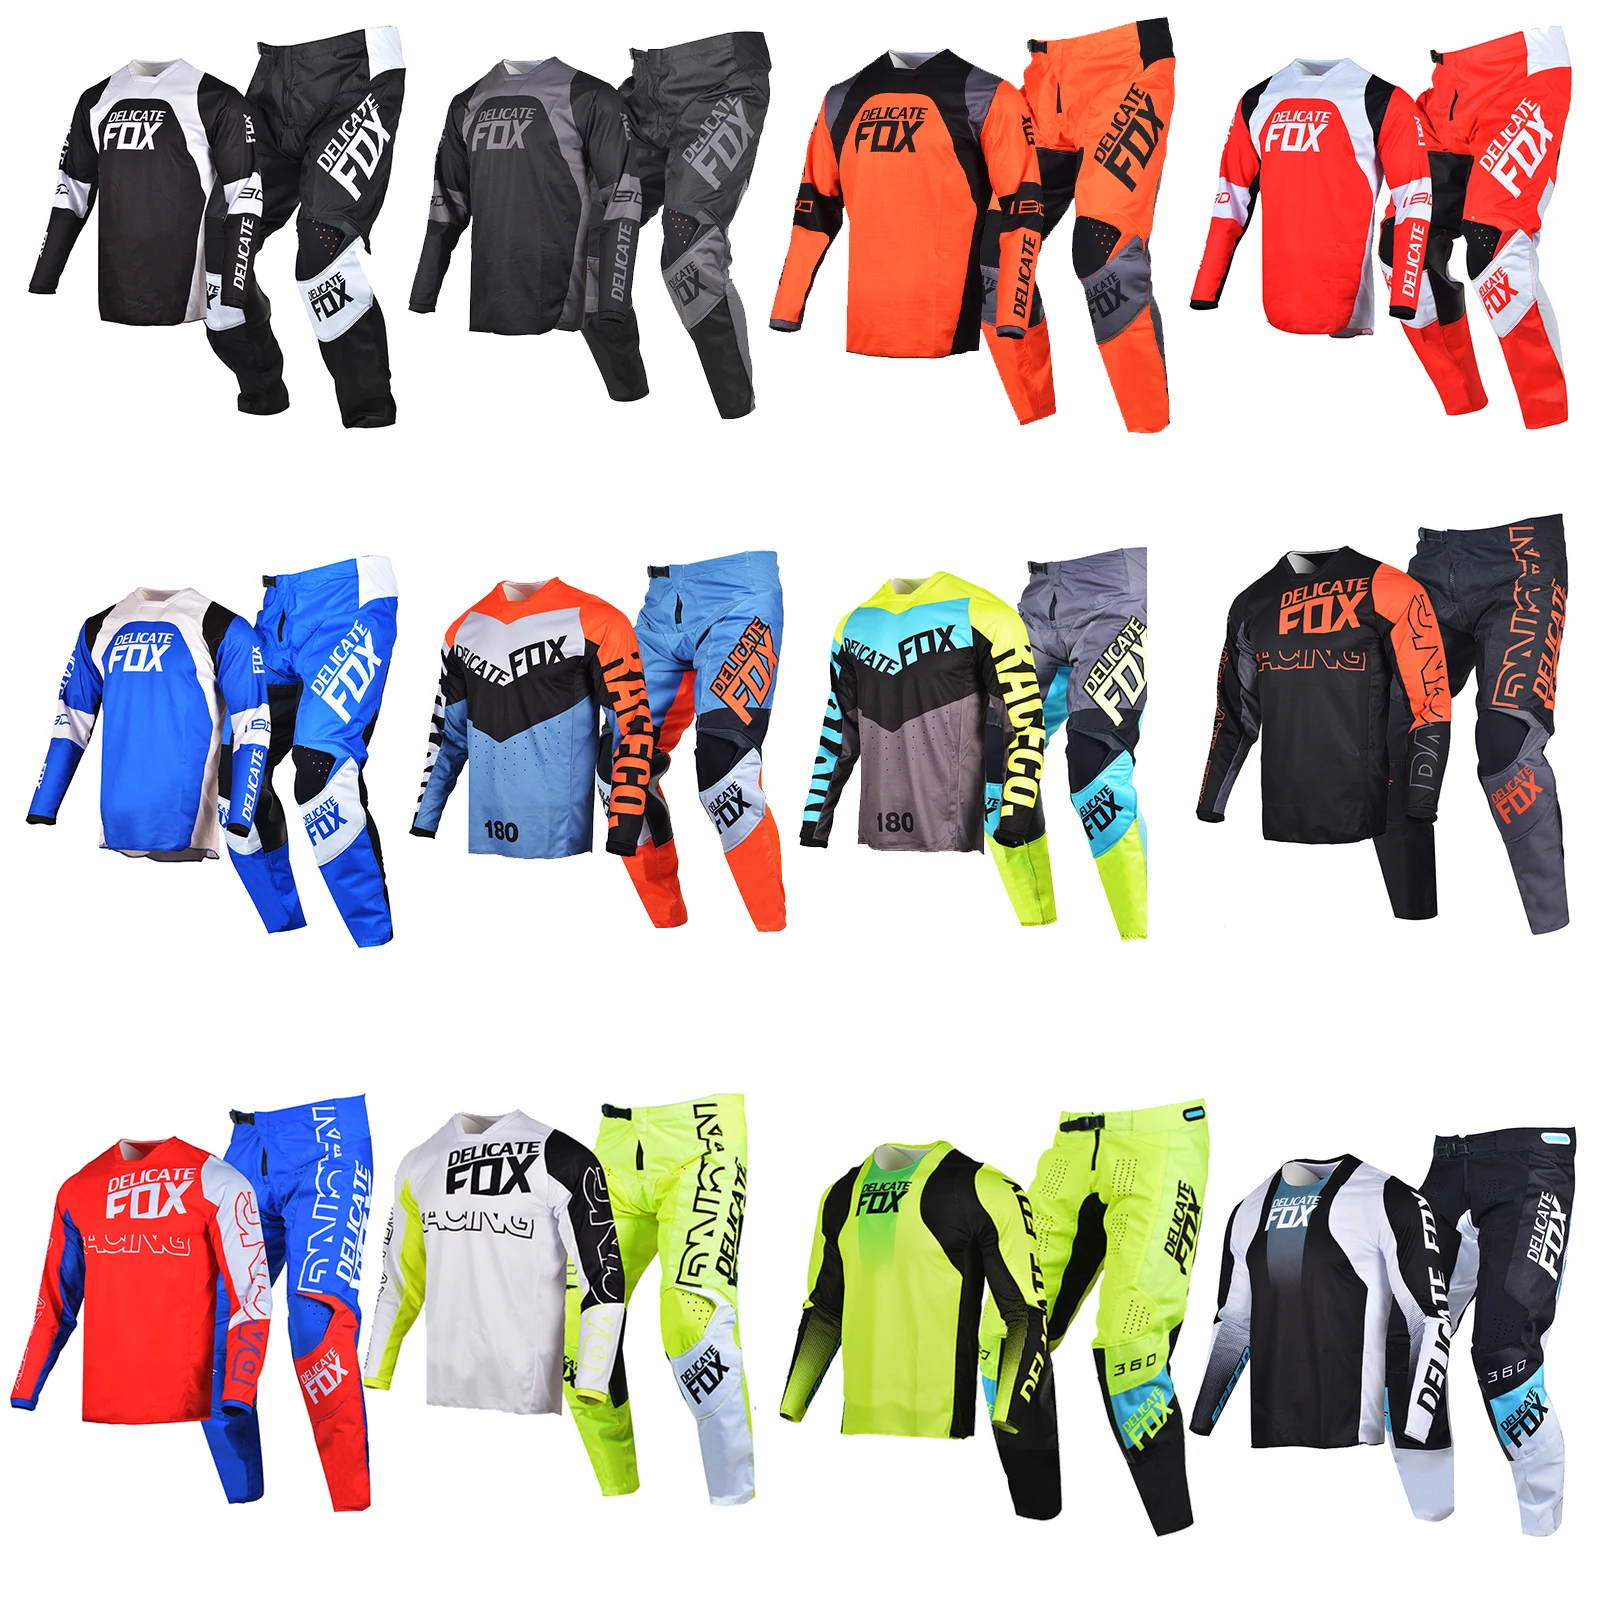 E fox motocross gear set jersey pants 180 360 mx combo moto enduro atv outfit equipment thumb200